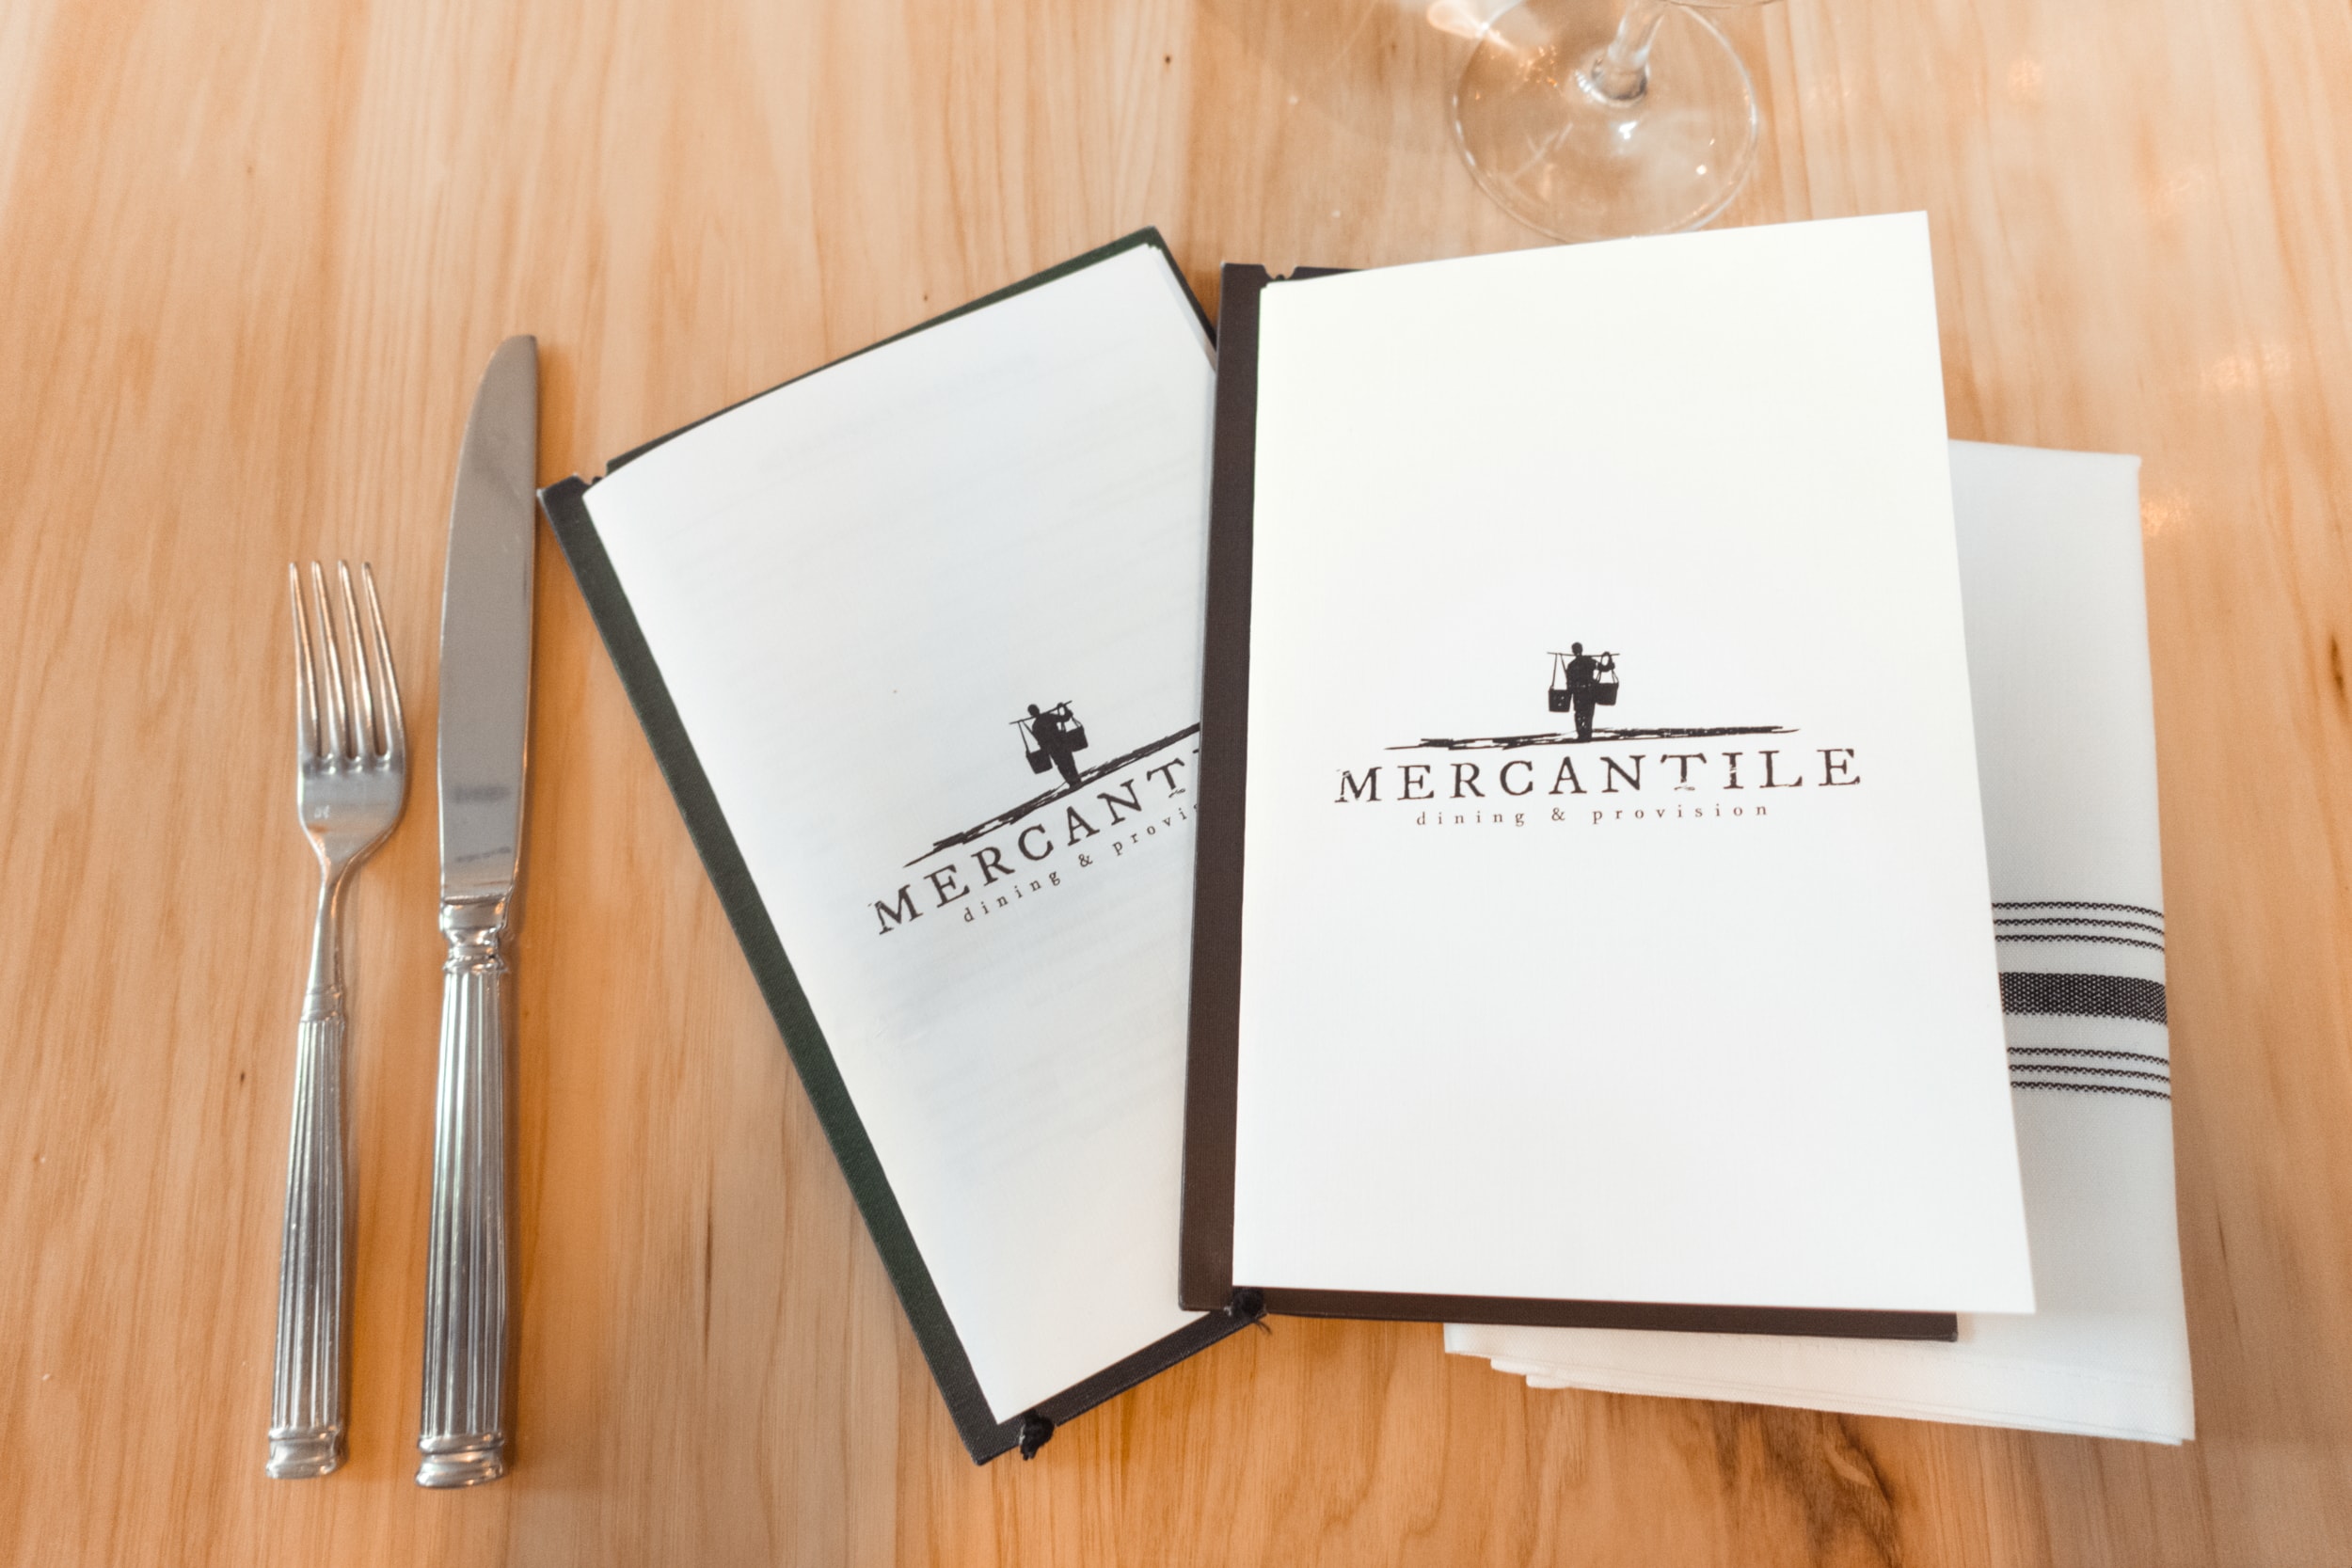 The Mercantile menu